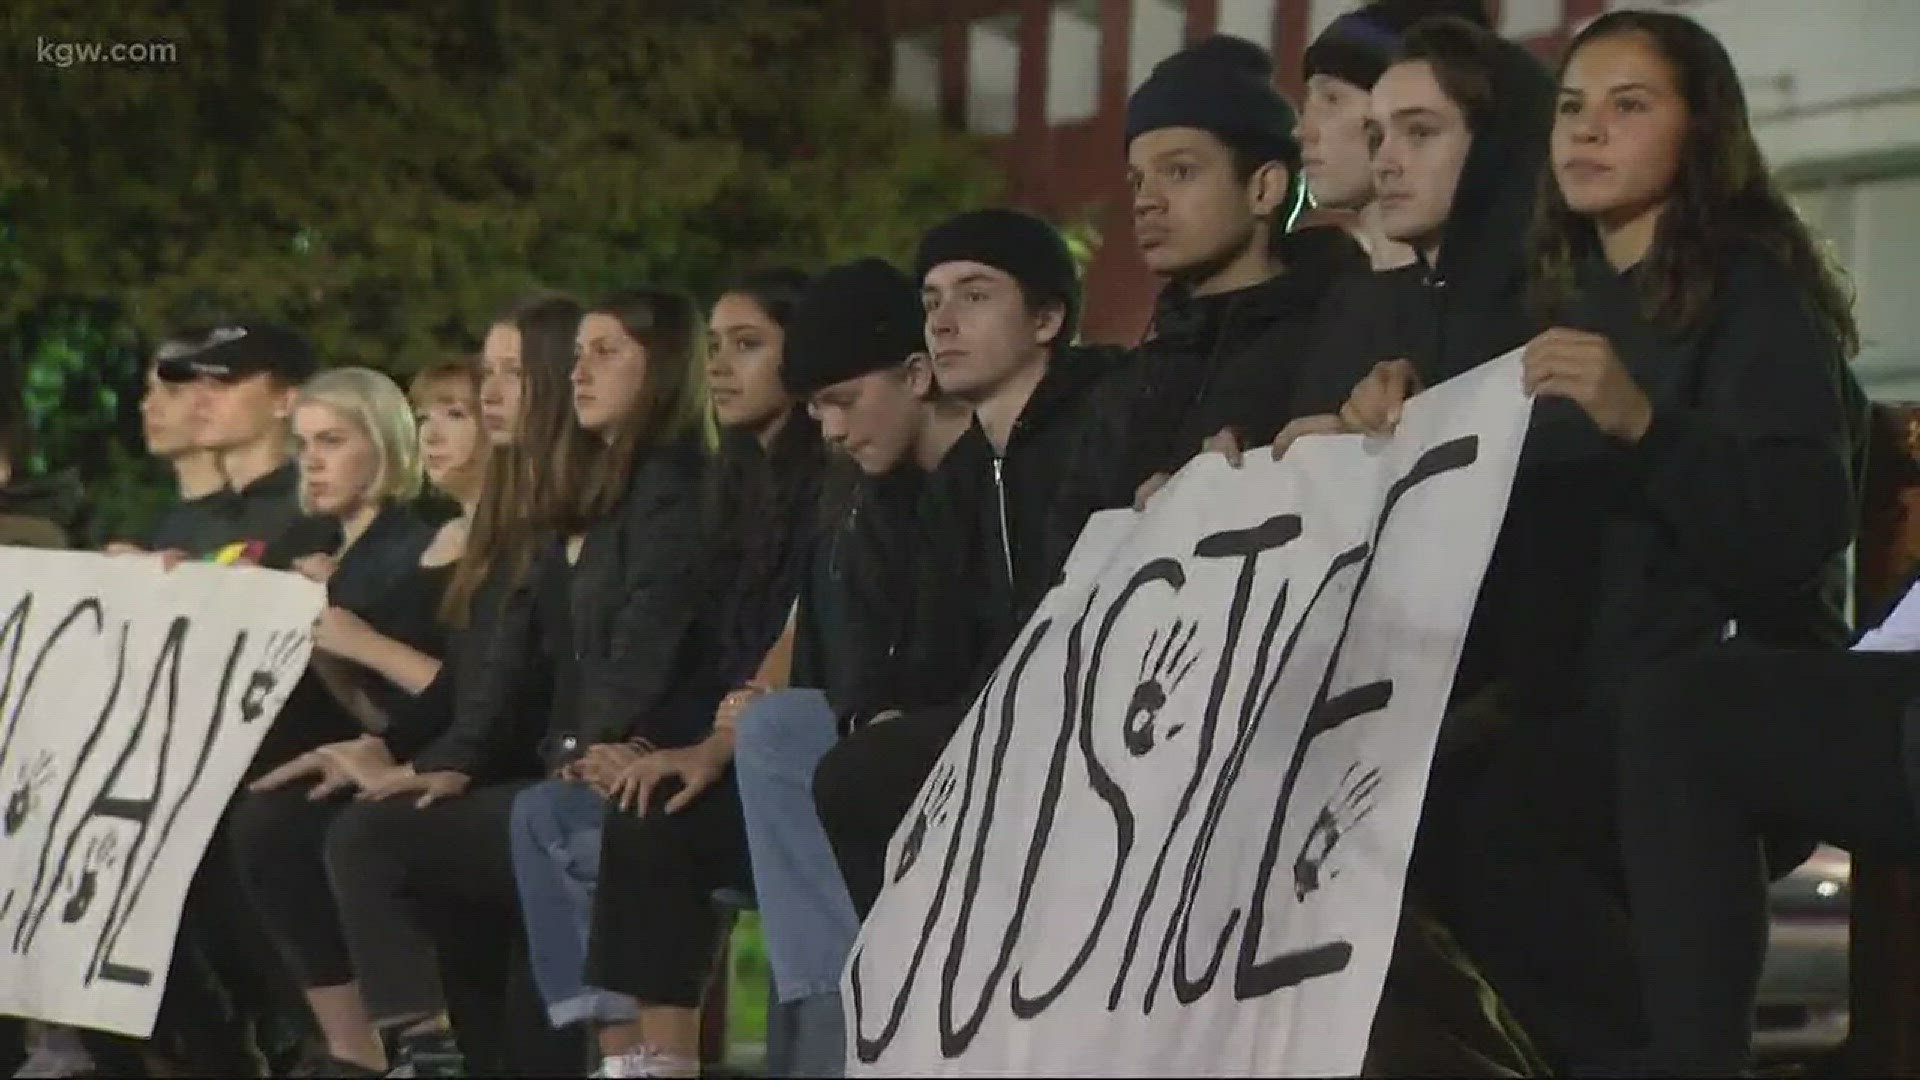 Dozens of students kneel during national anthem